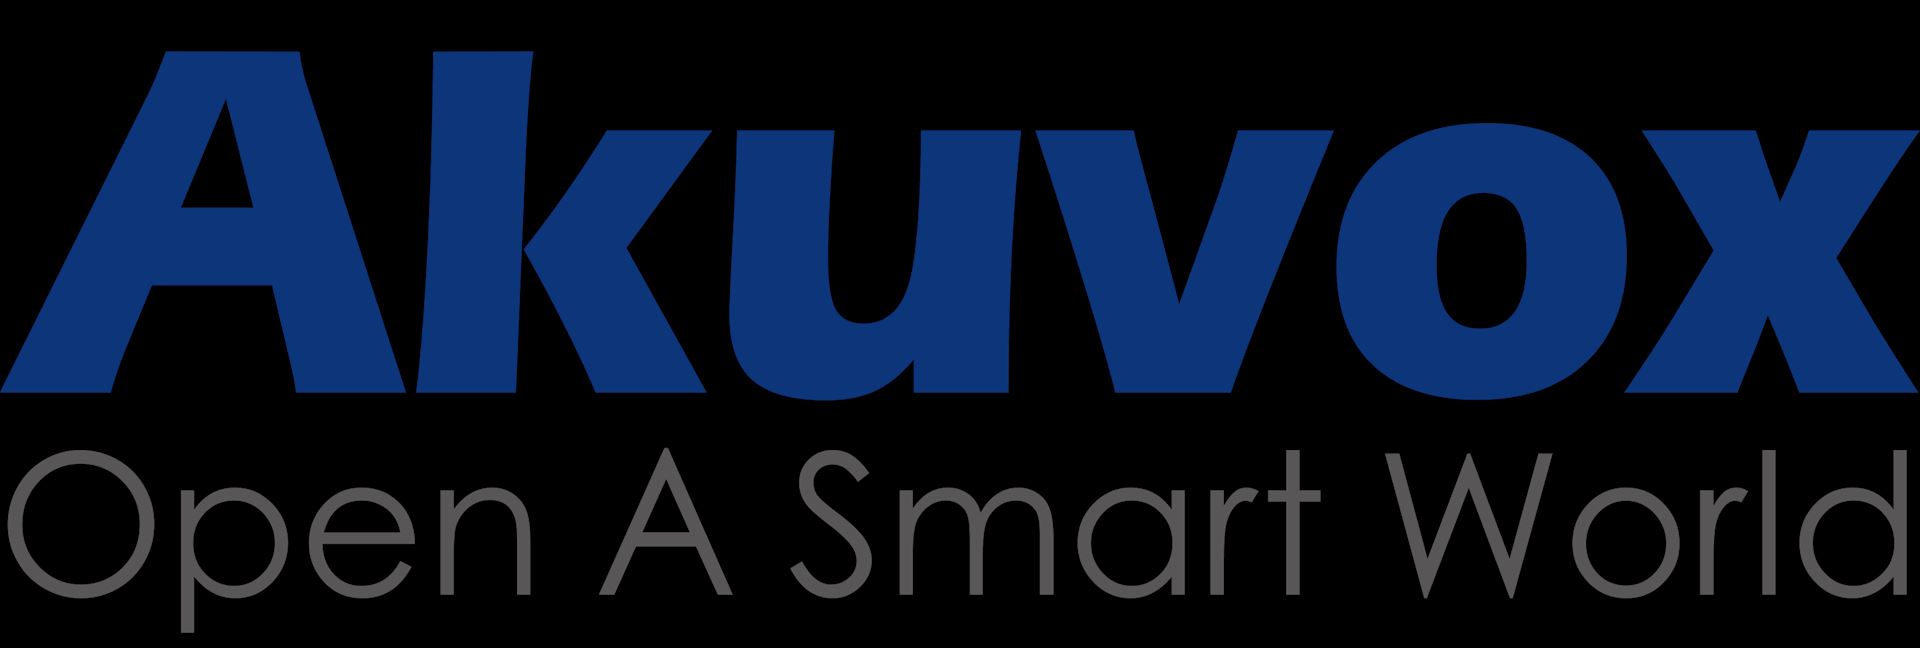 akuvox-logo-1